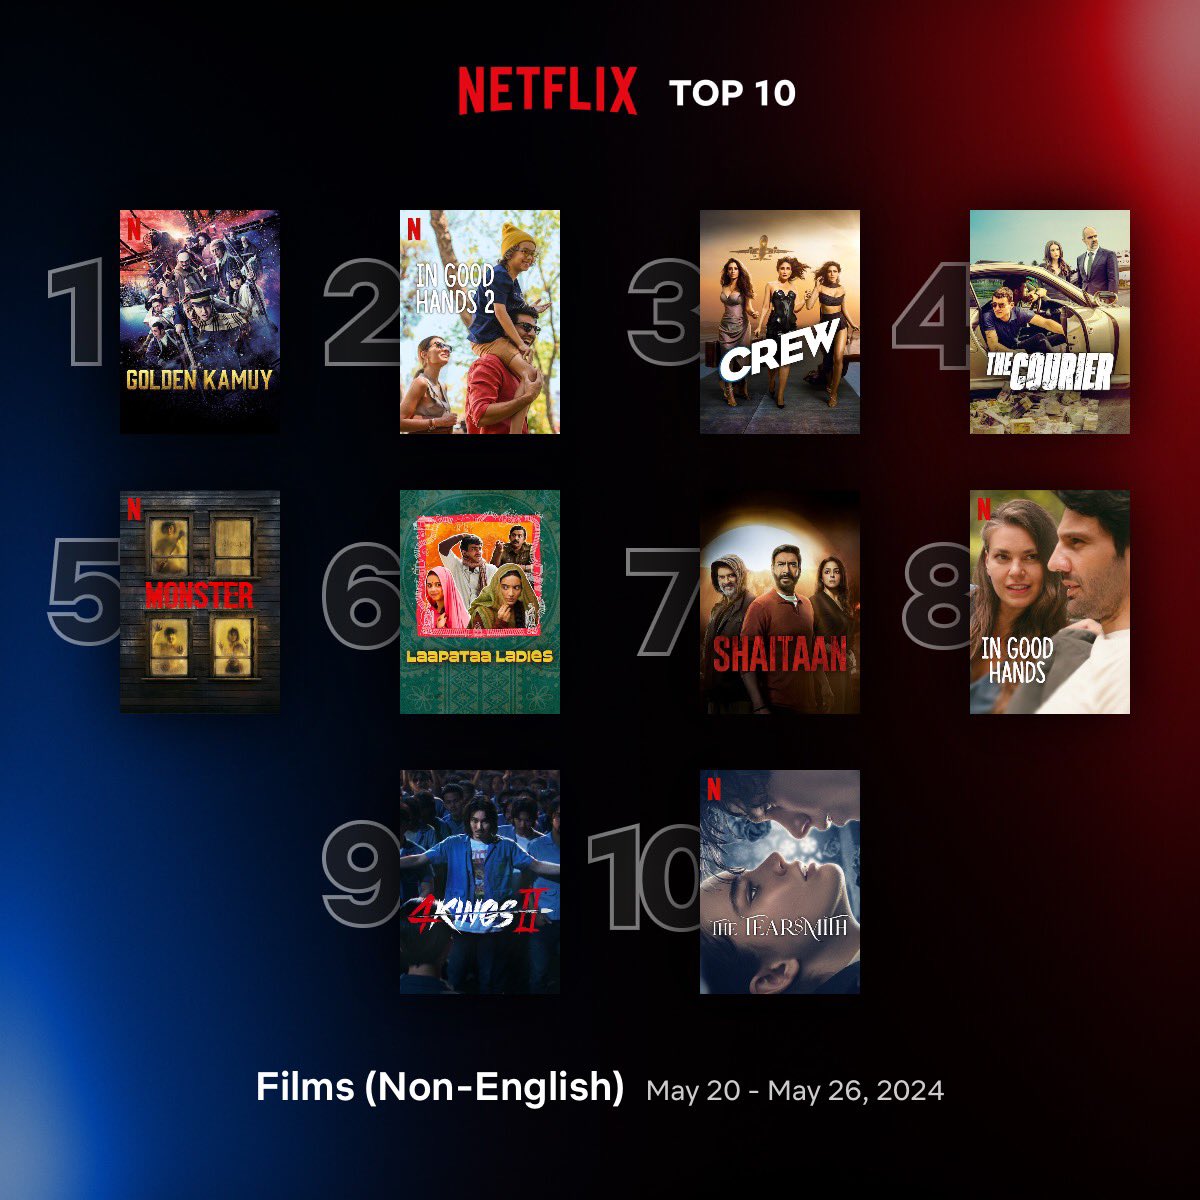 Global Top 10 Non-English Films on Netflix between 20 - 26 May 1. #GoldenKamuy 🇯🇵 2. #InGoodHands2 🇹🇷 3. #Crew 🇮🇳 4. #TheCourier / #ElCorreo 🇪🇸 🇧🇪 🇫🇷 5. #Monster 🇮🇩 6. #LaapataaLadies 🇮🇳 7. #Shaitaan 🇮🇳 8. #InGoodHands 🇹🇷 9. #4Kings2 🇹🇭 10. #TheTearsmith 🇮🇹